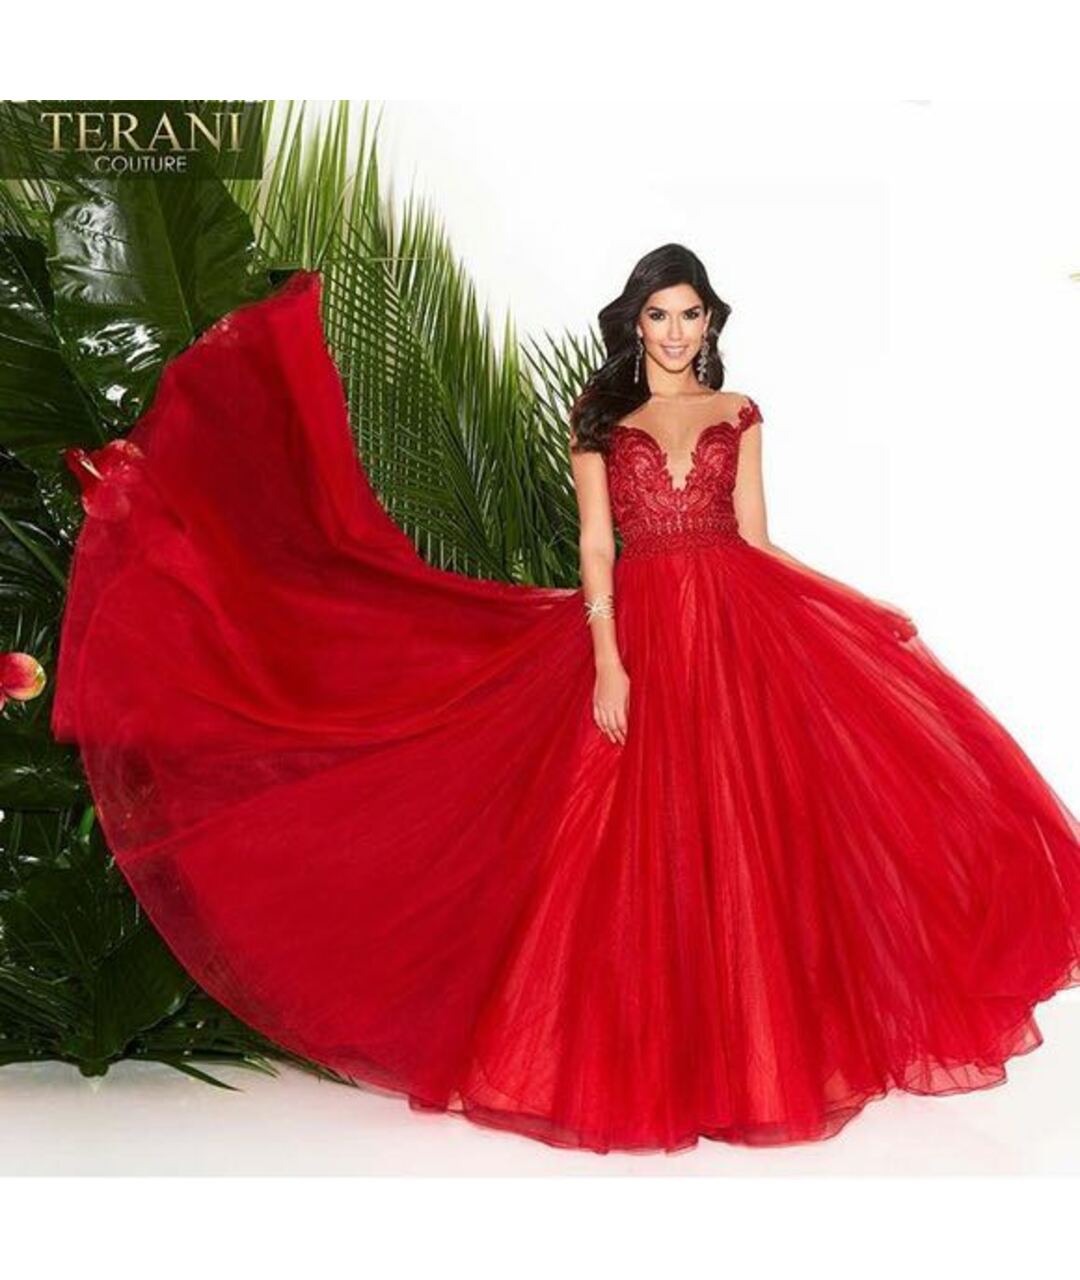 TERANI COUTURE Красное вечернее платье, фото 2